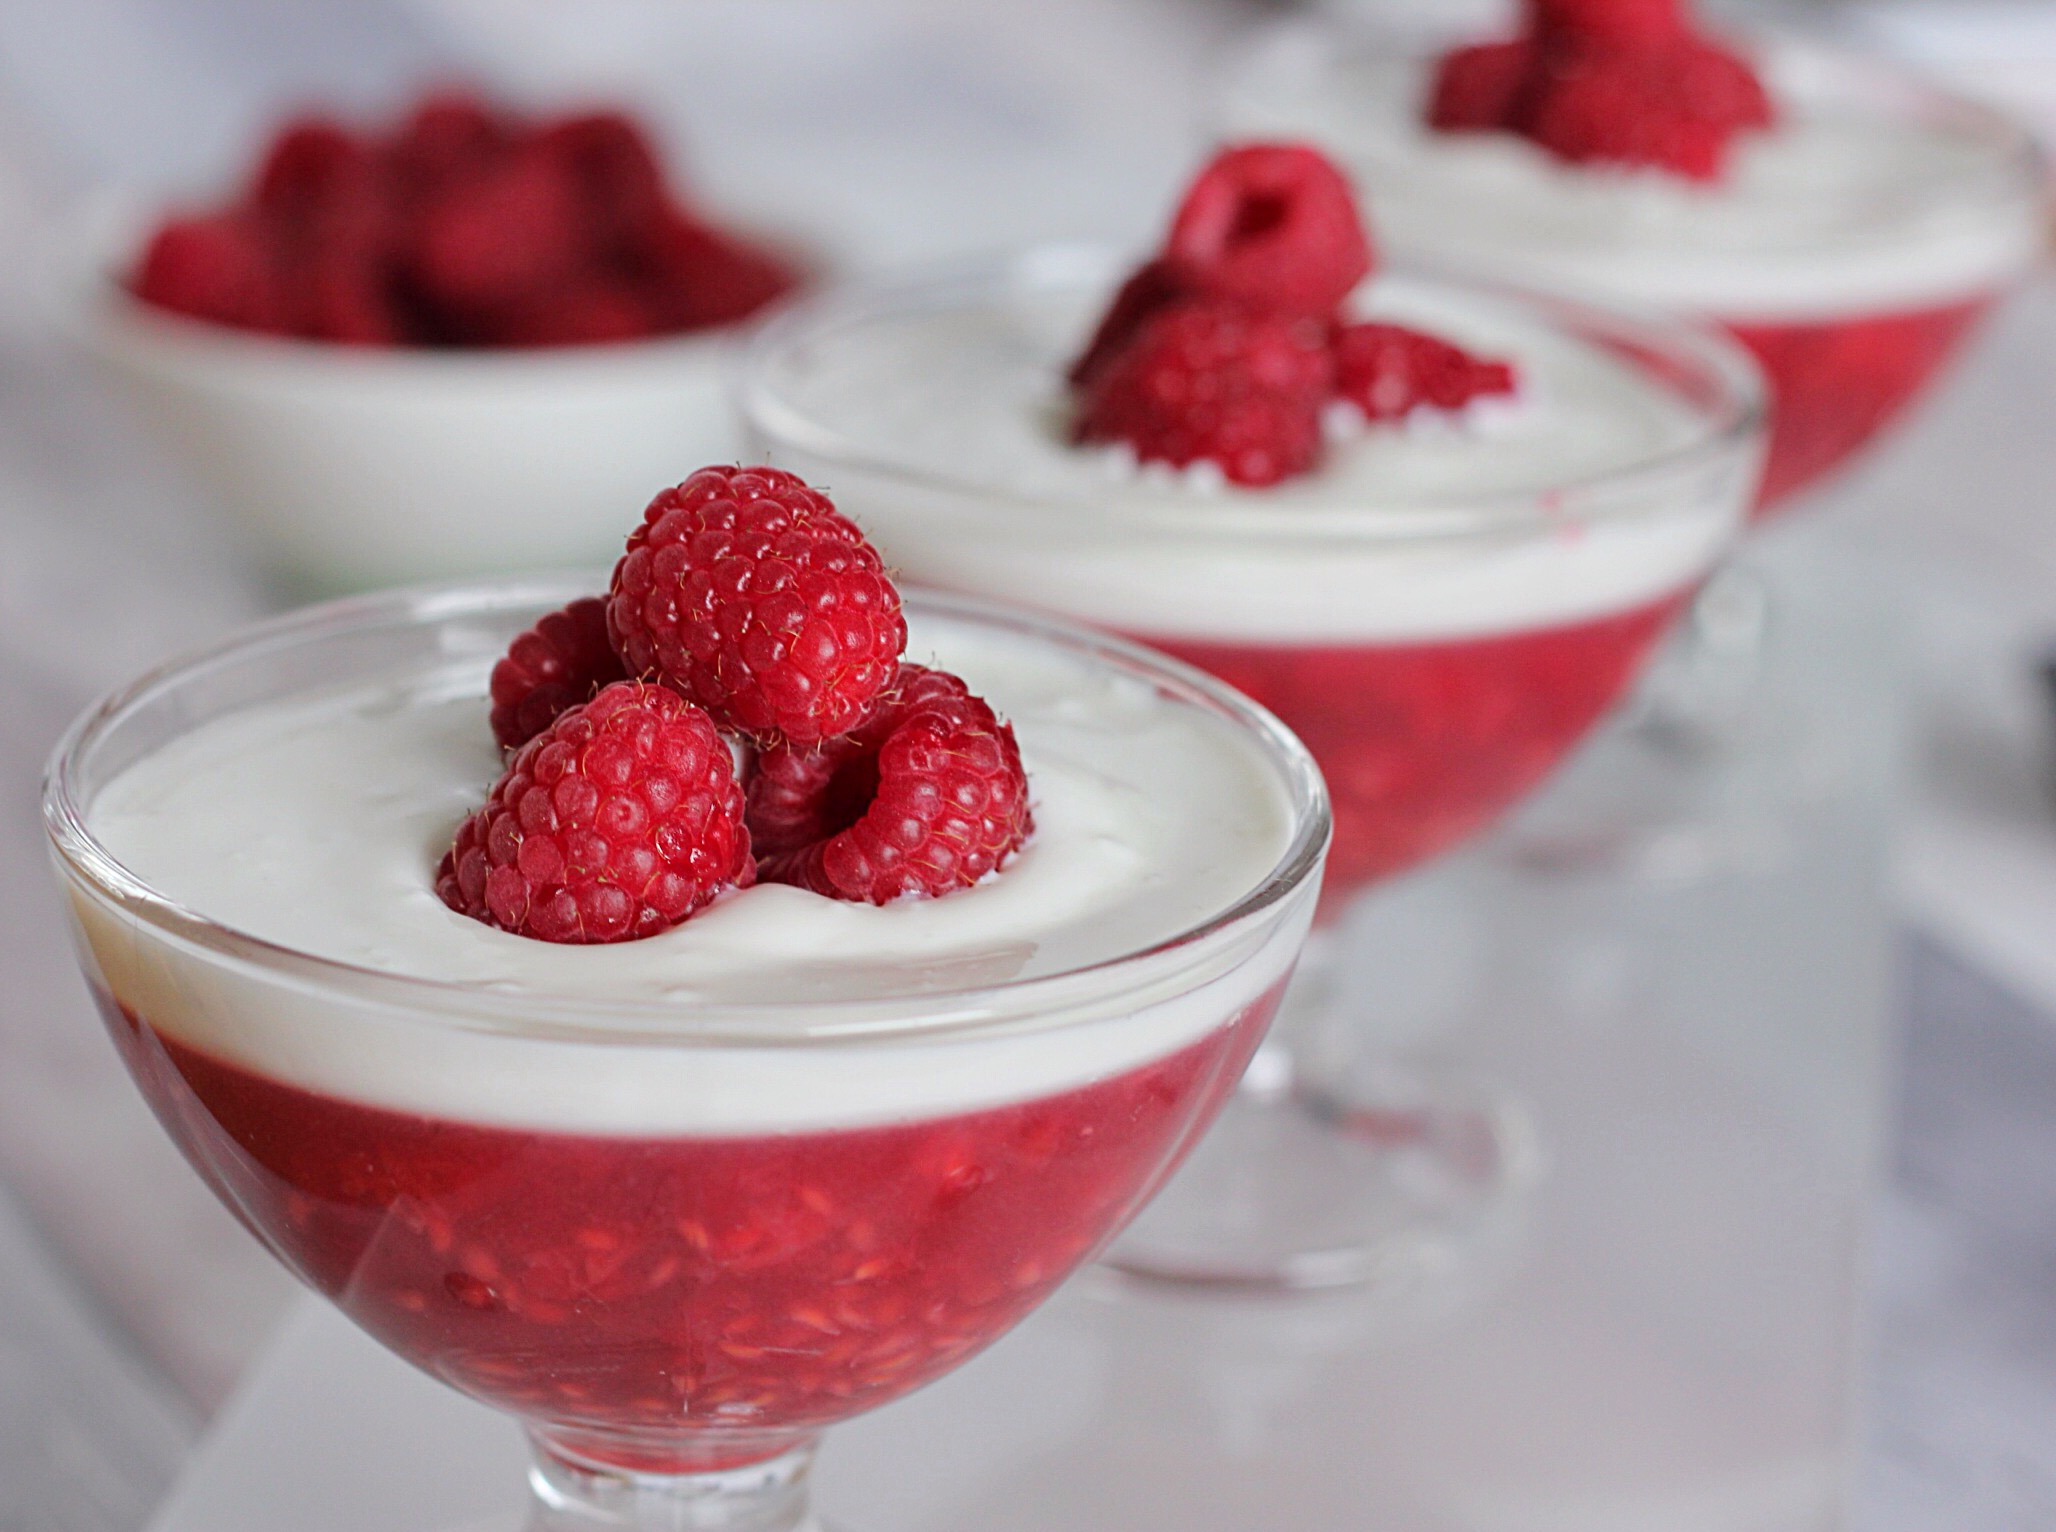 Raspberry and Cream Jellies | A Health Matter